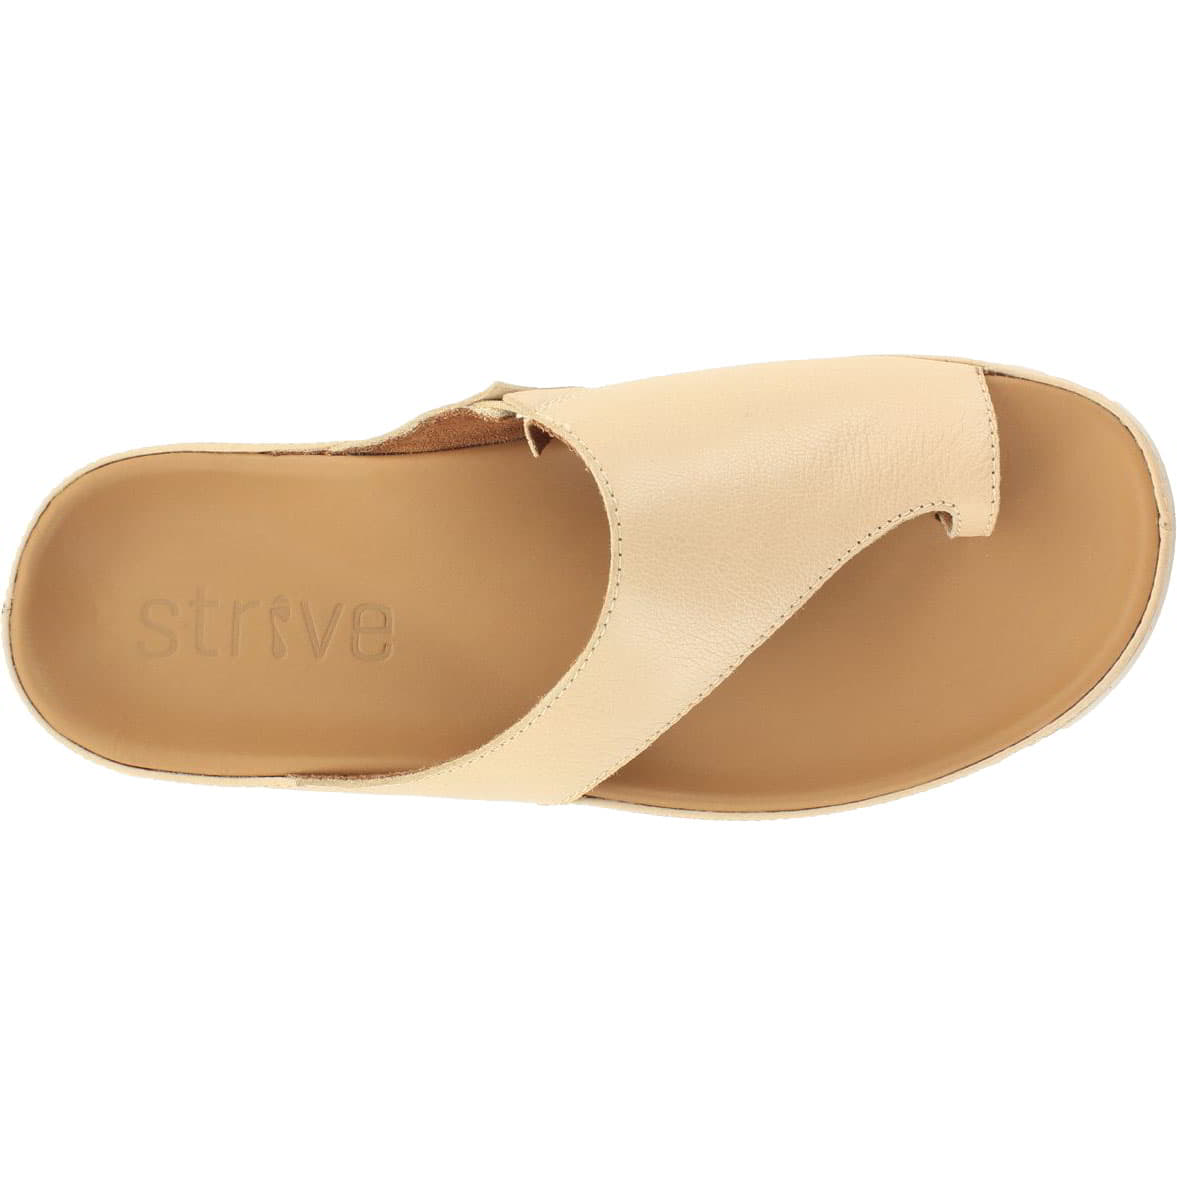 strive womens capri orthotic footbed toe post sandals - uk 8